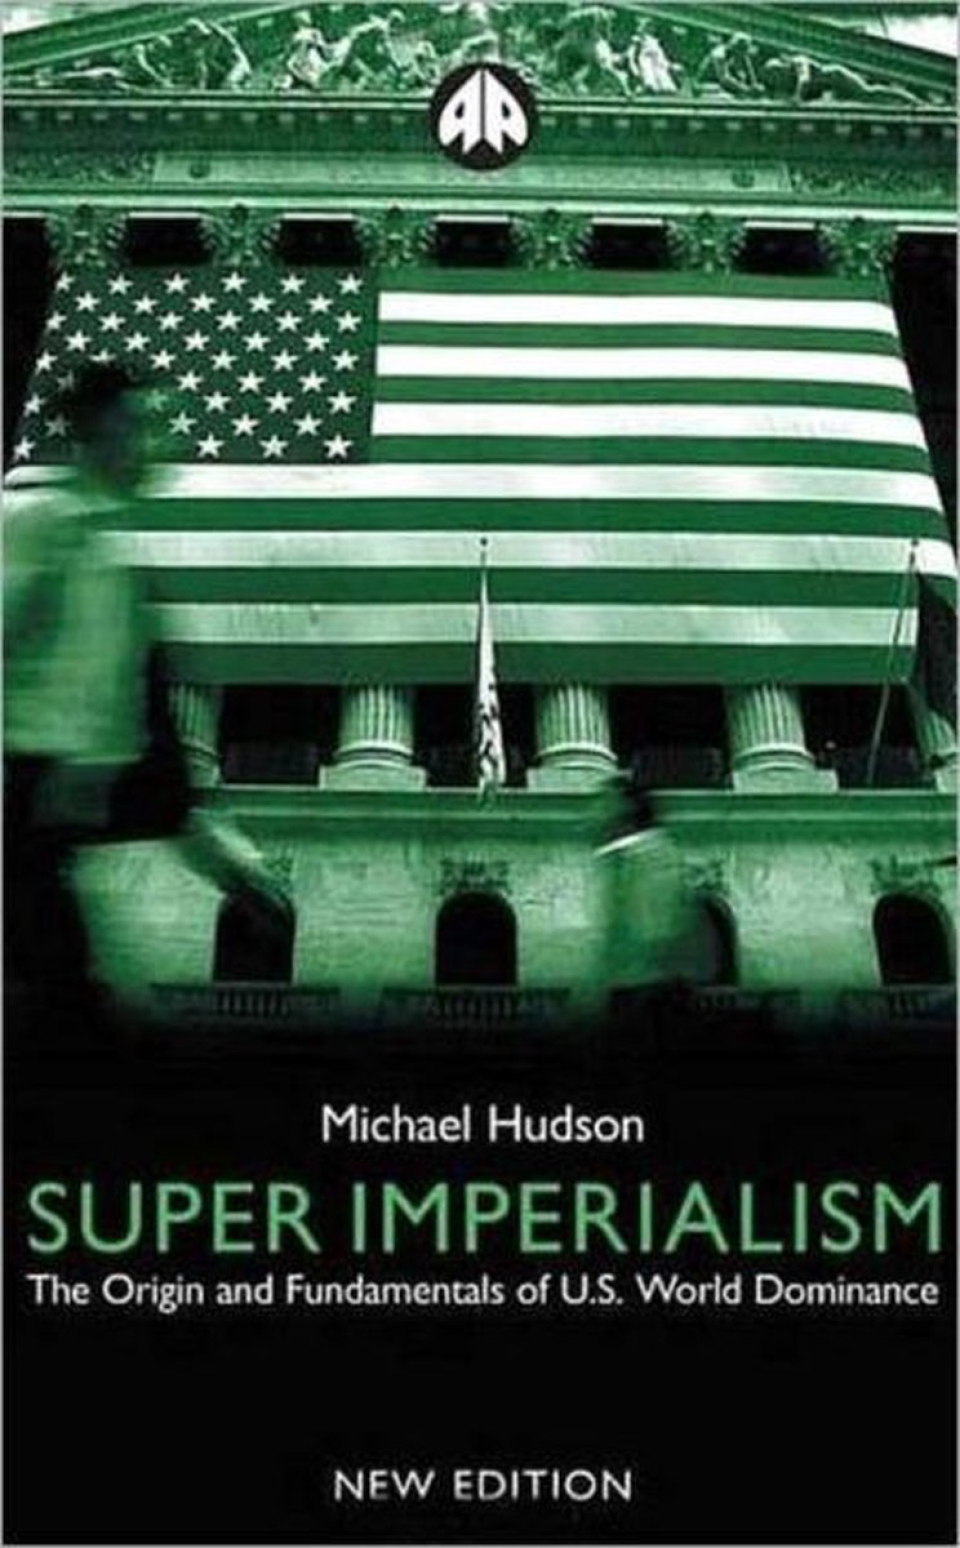 Book of Week: Super Imperialism: The Origin and Fundamentals of U.S. World Dominance